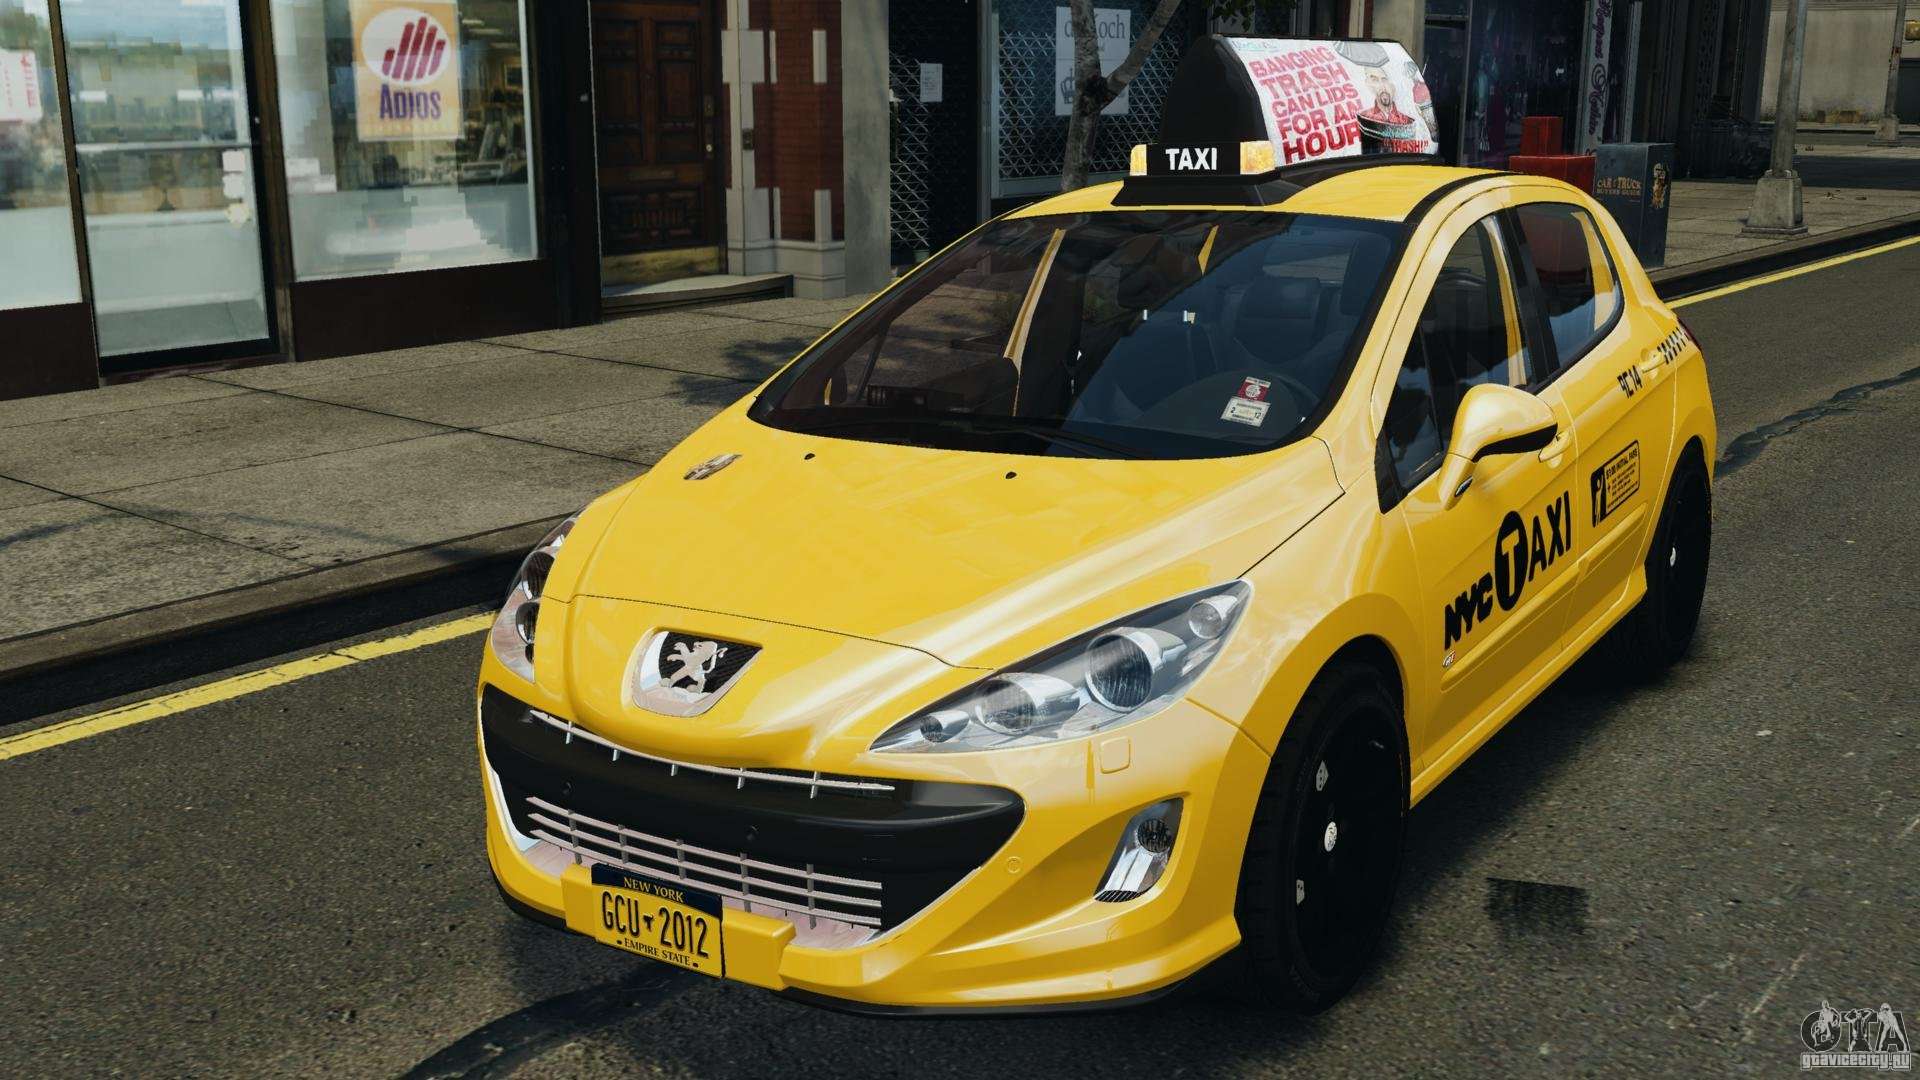 Peugeot taxi для gta 5 фото 75